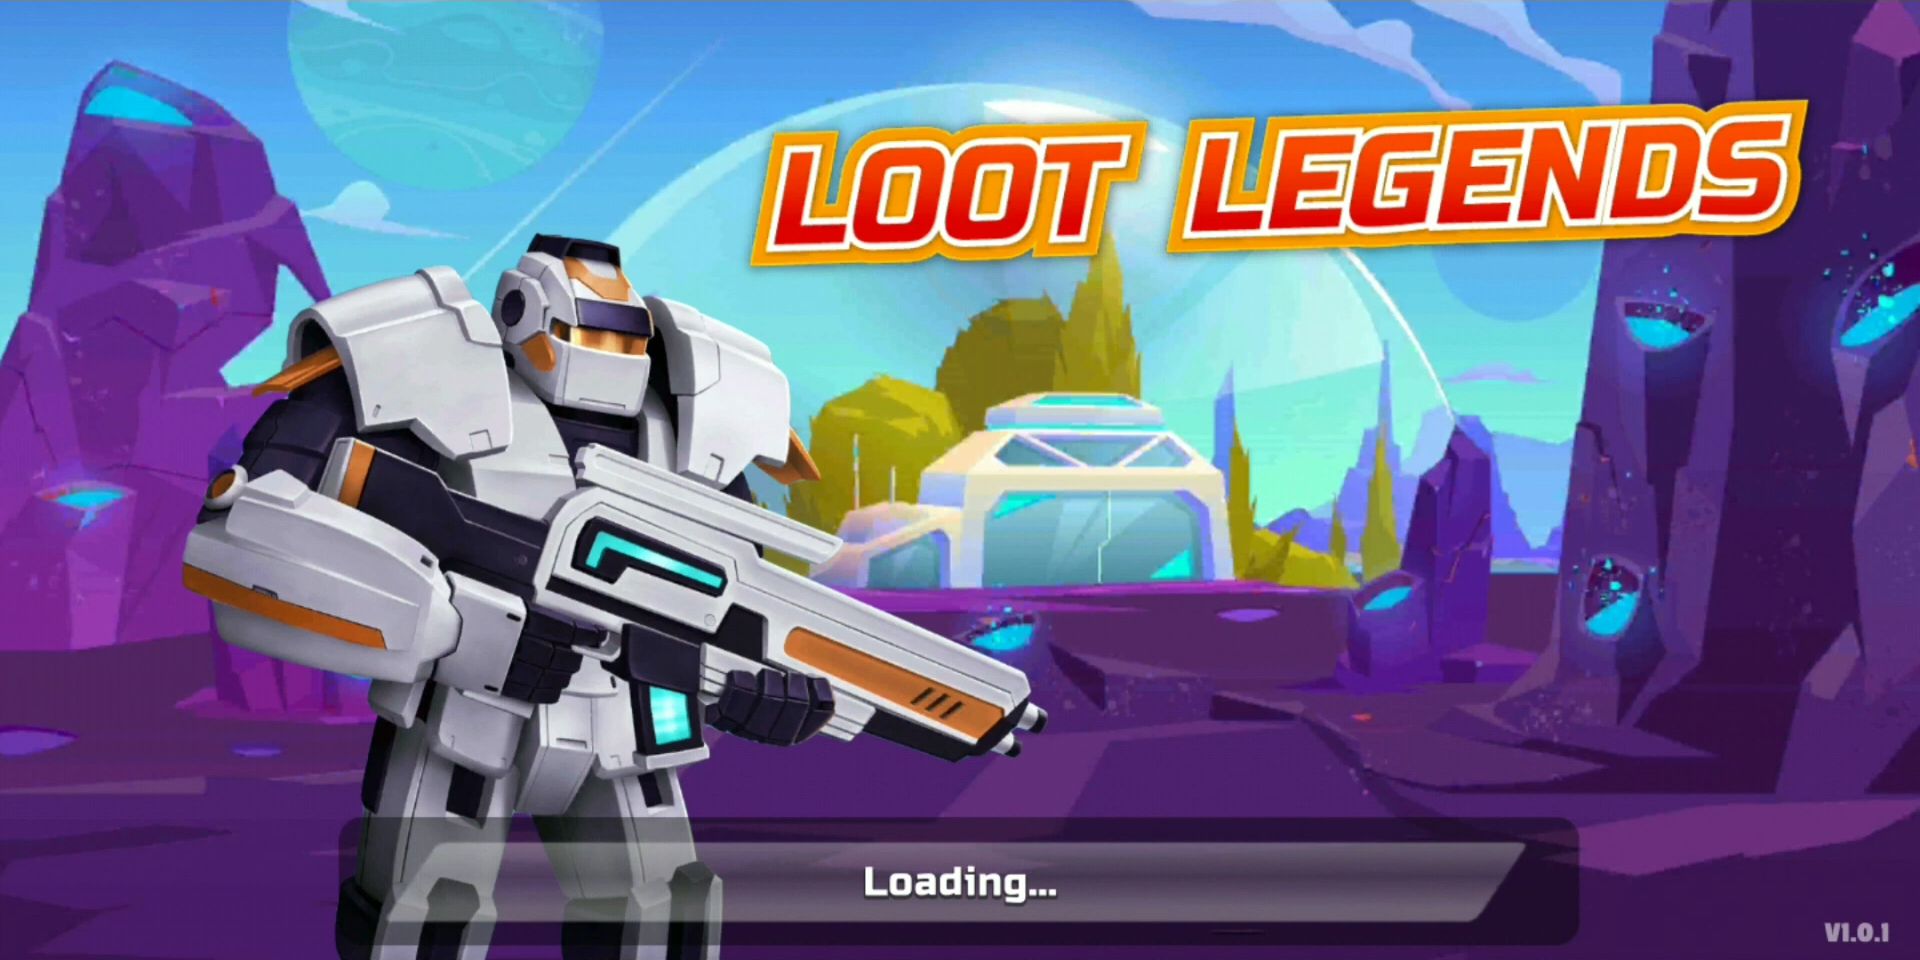 Download Loot Legends: Robots vs Aliens für Android kostenlos.